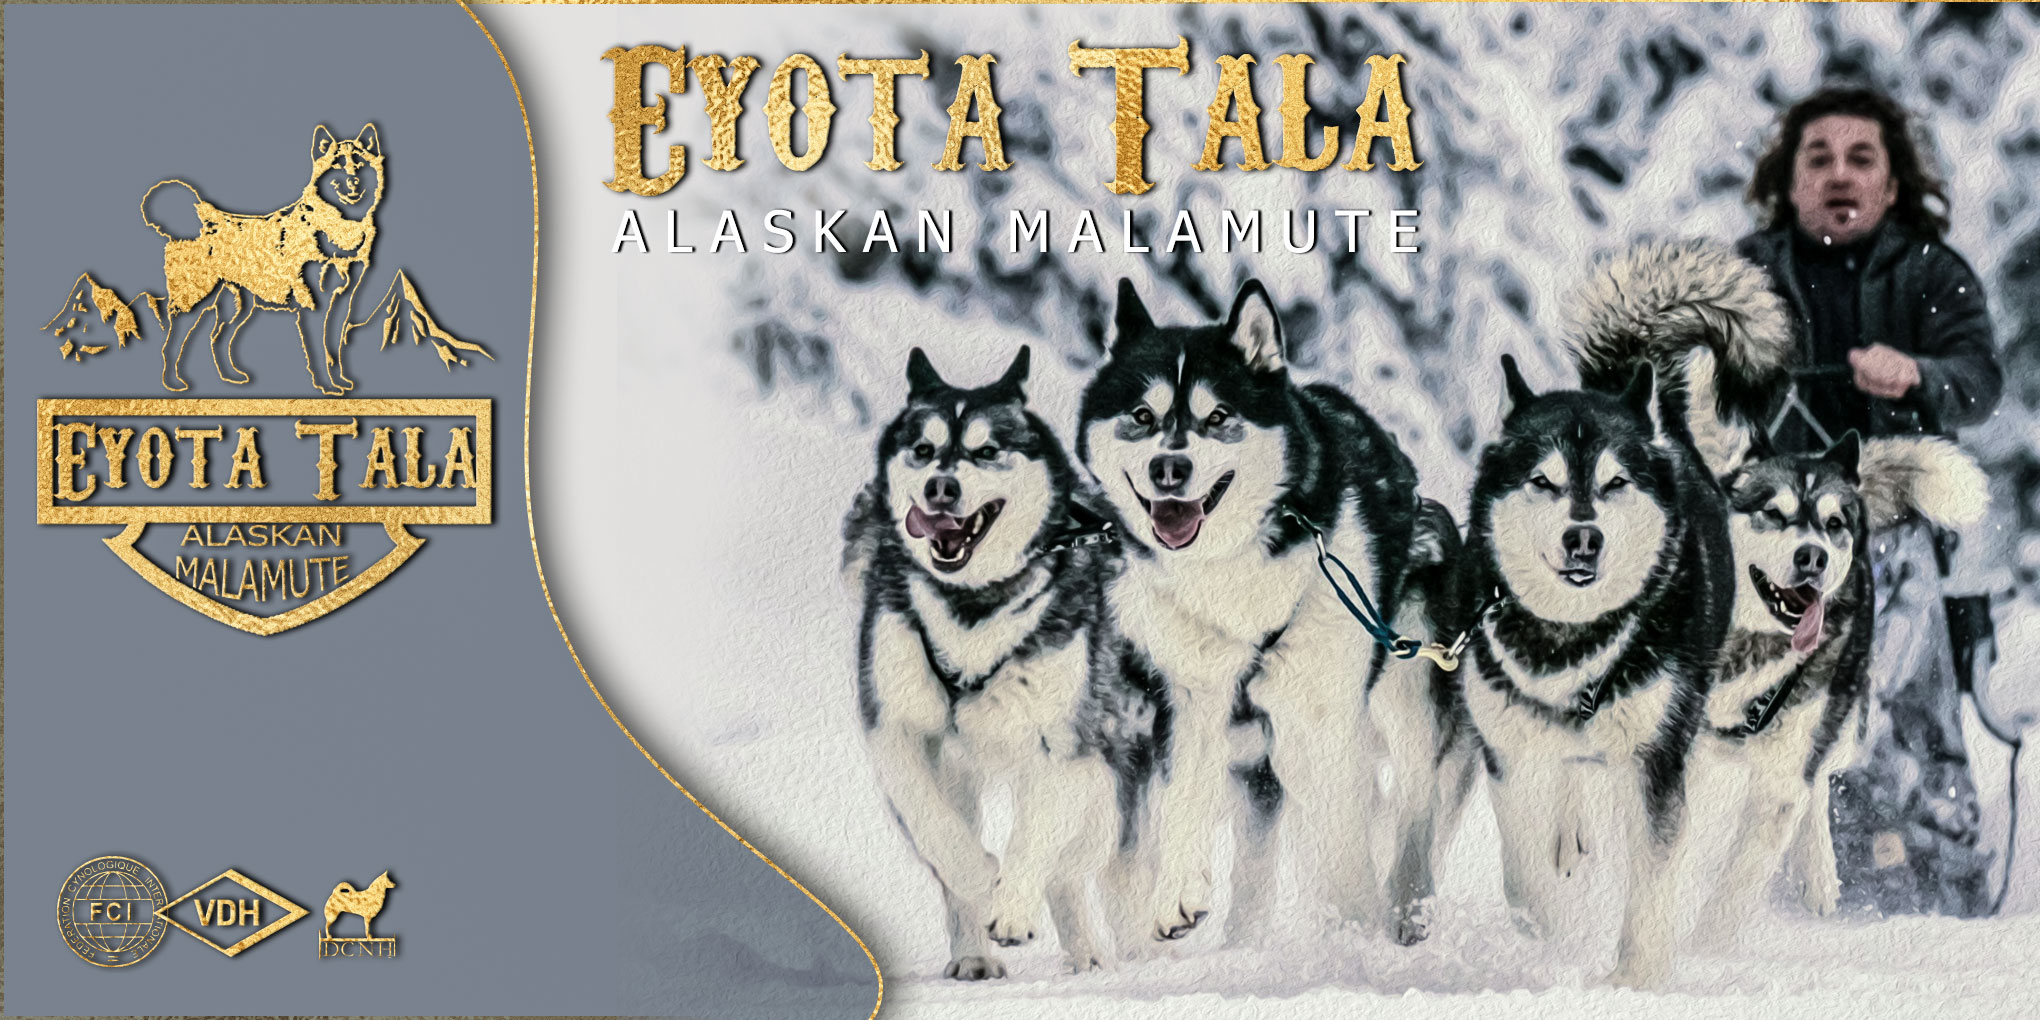 Eyota Tala